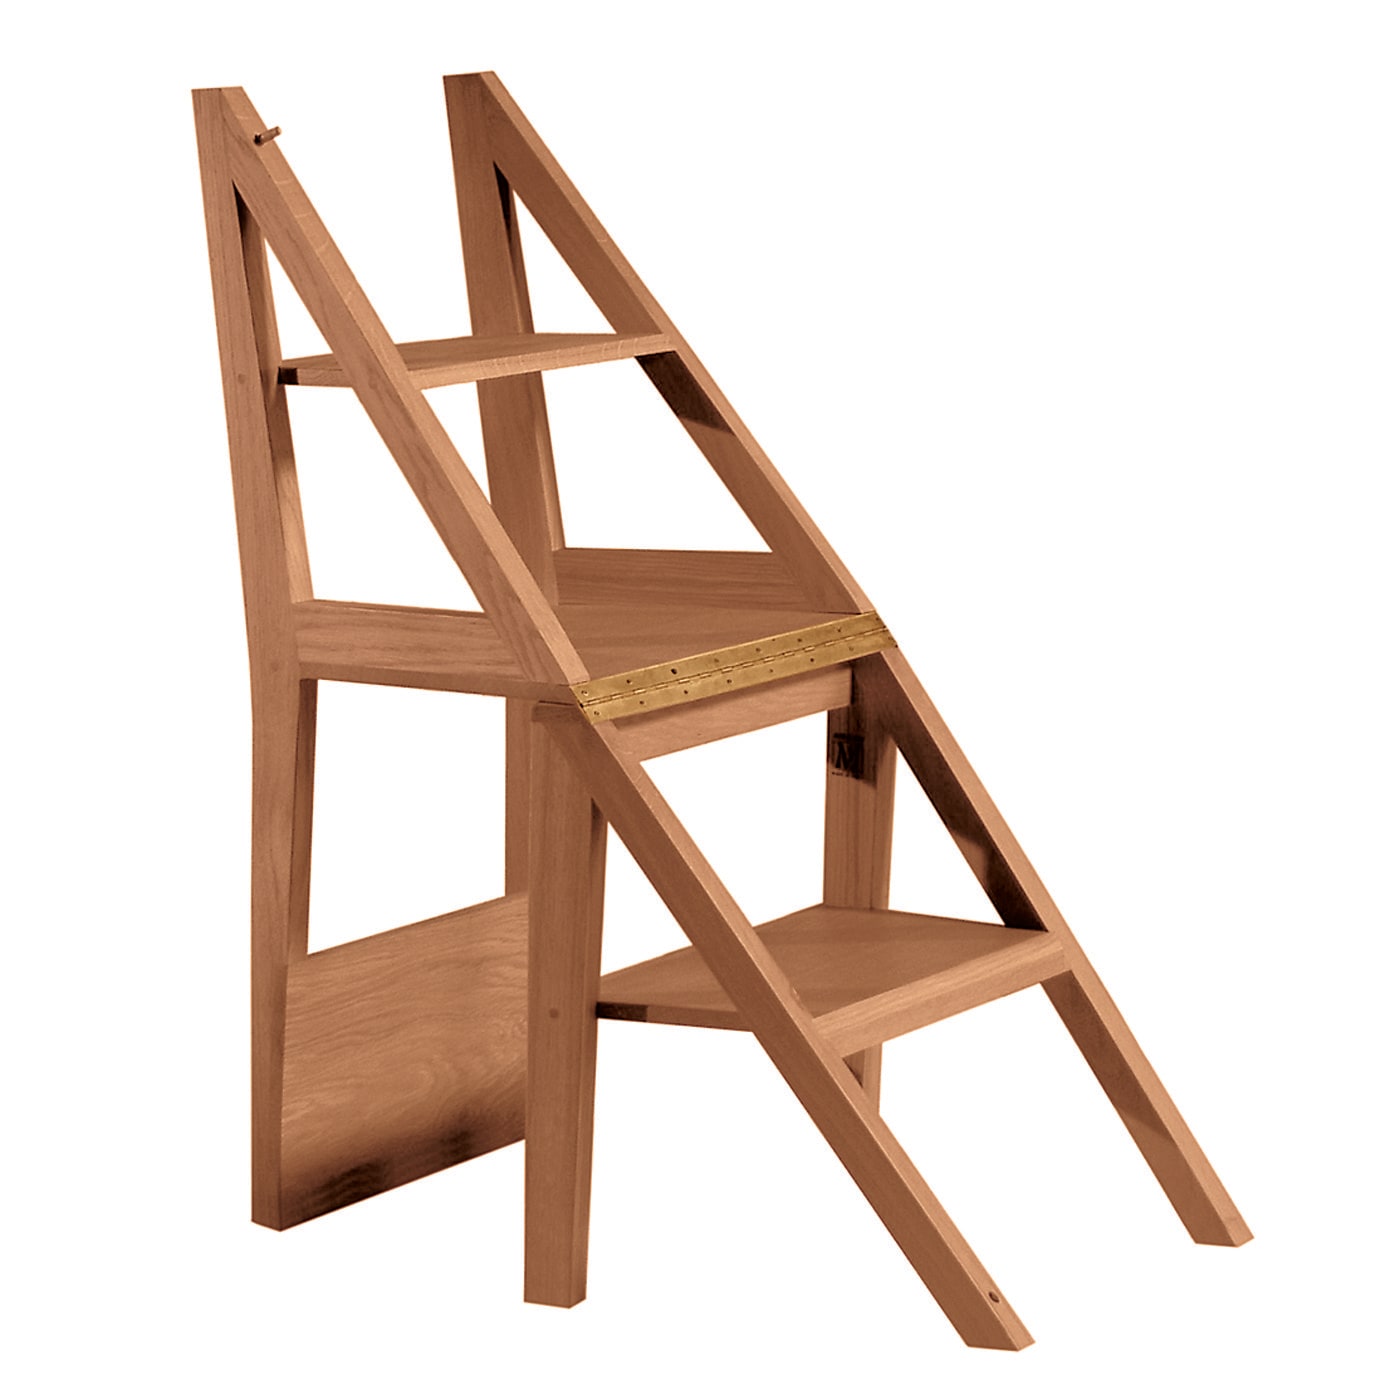 Scala Chair